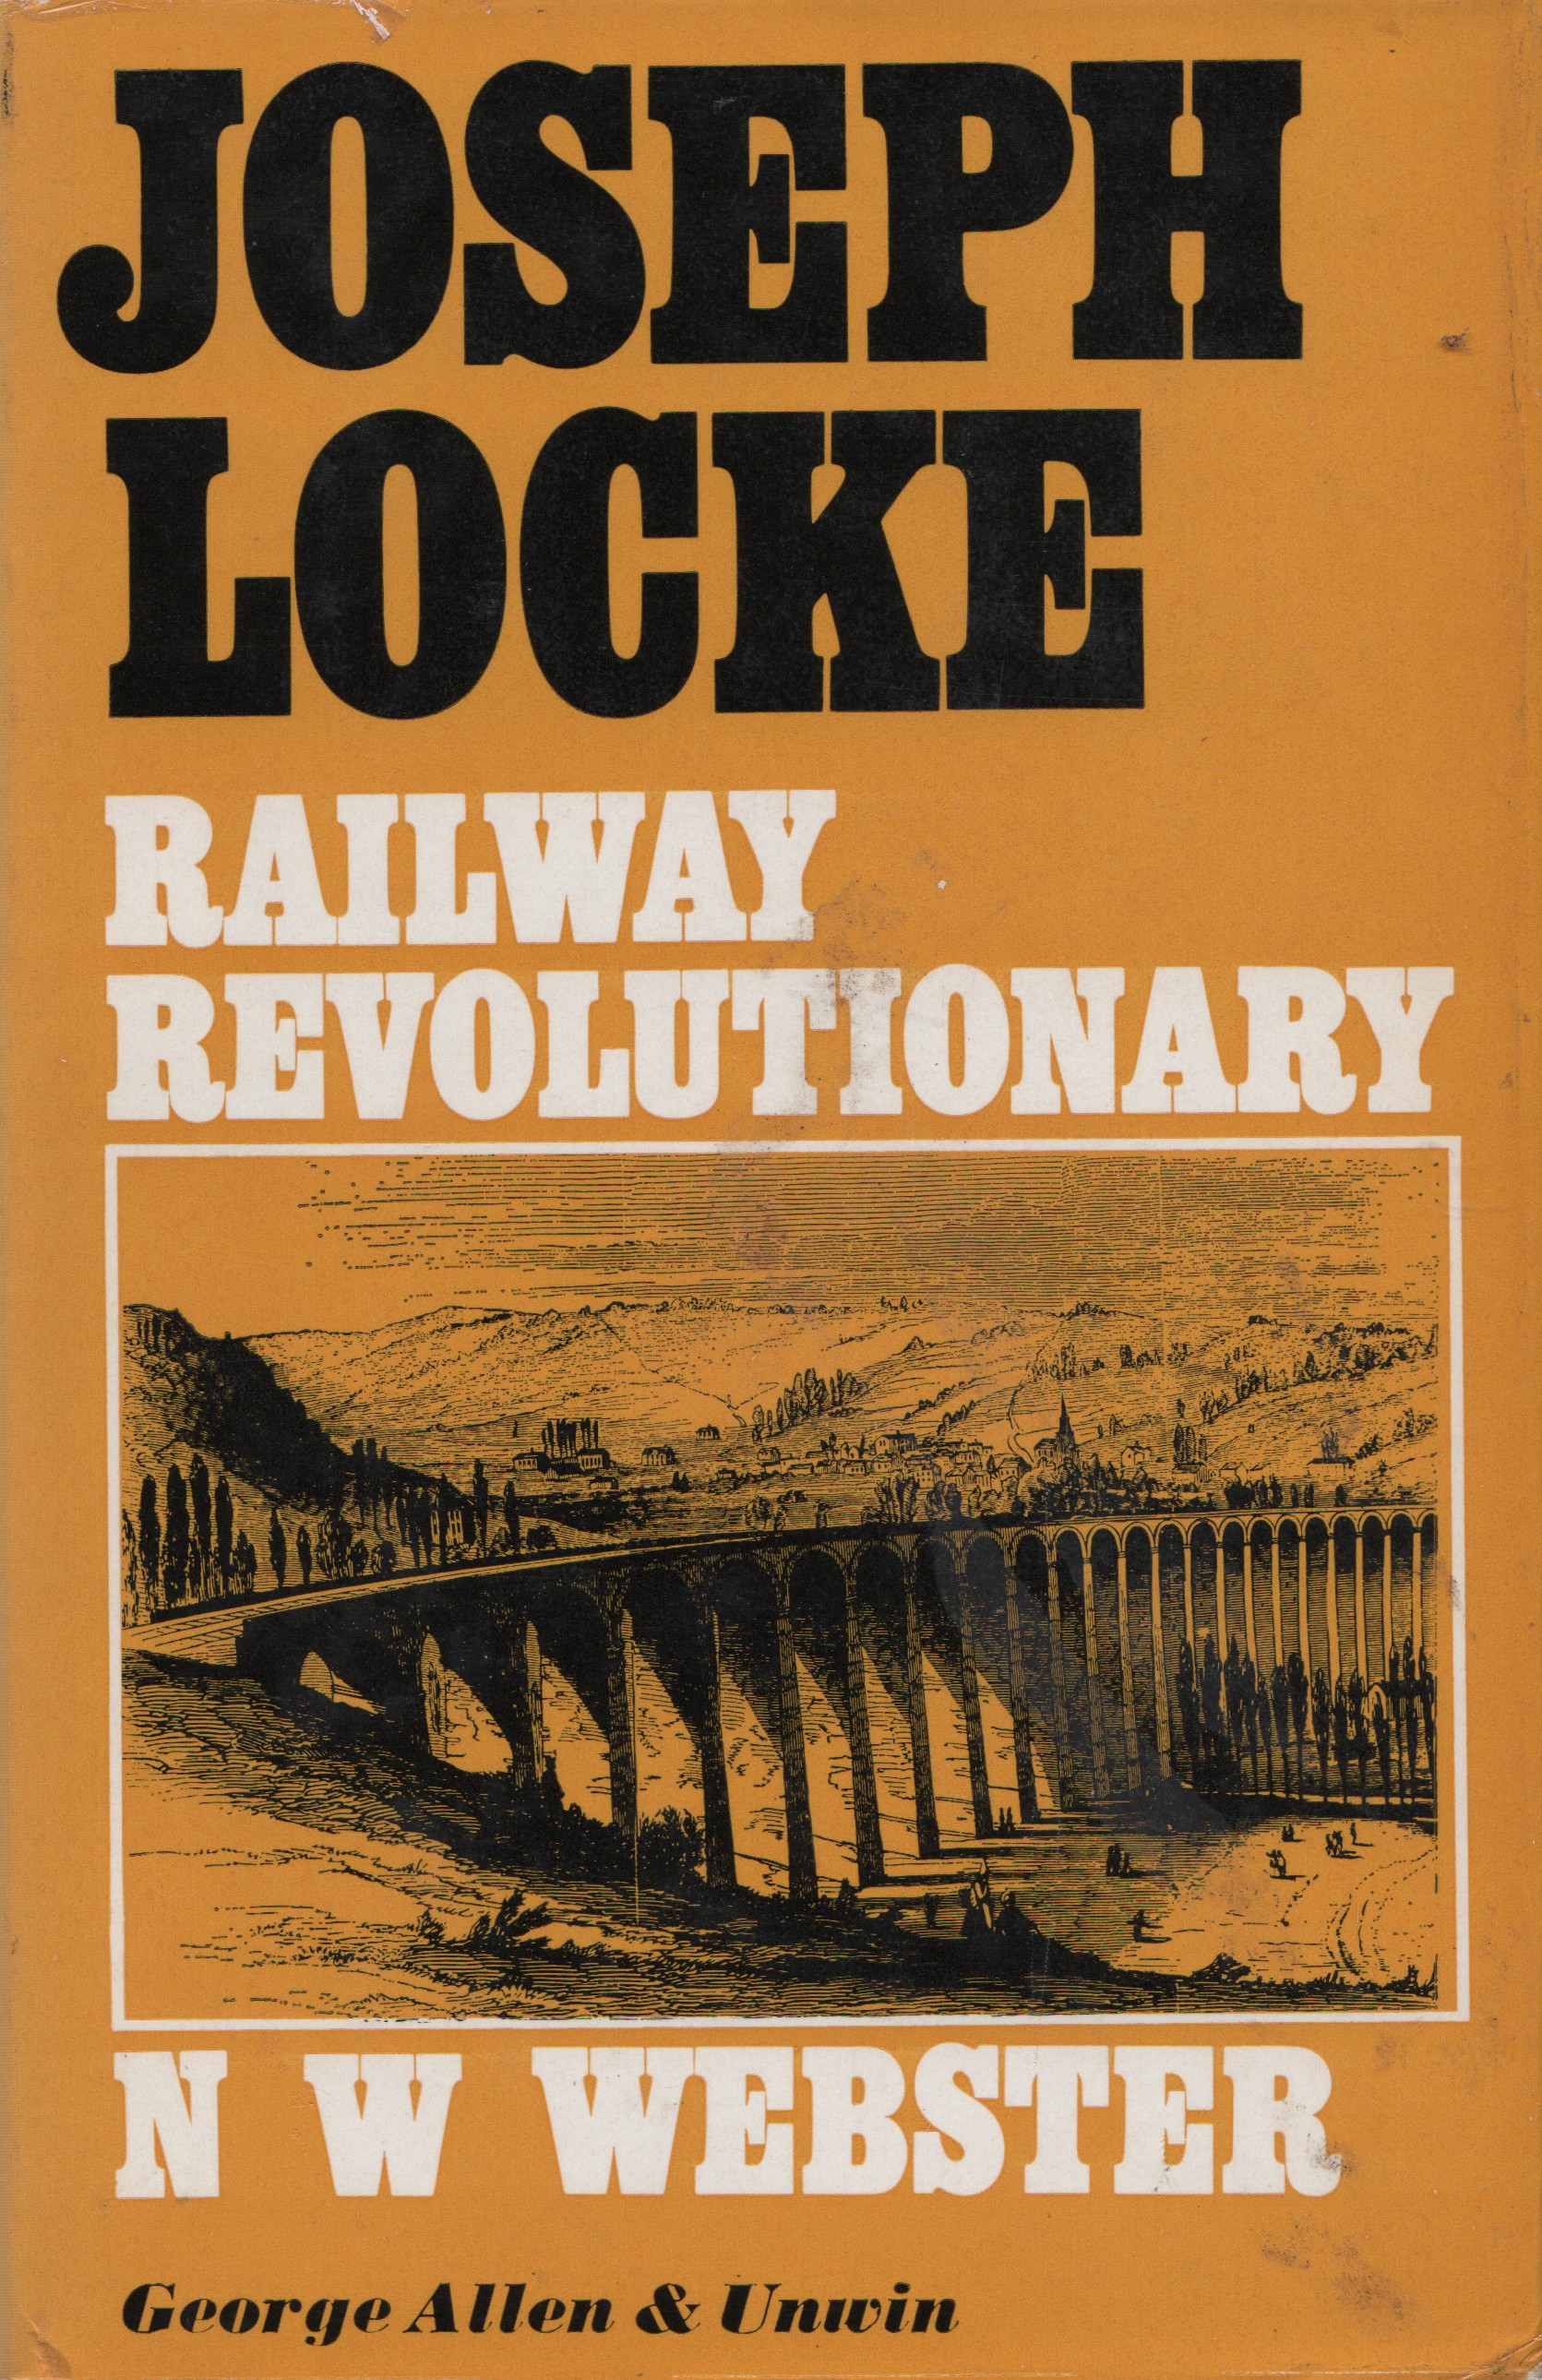 Joseph Locke: Railway Revolutionary - Webster, N.W